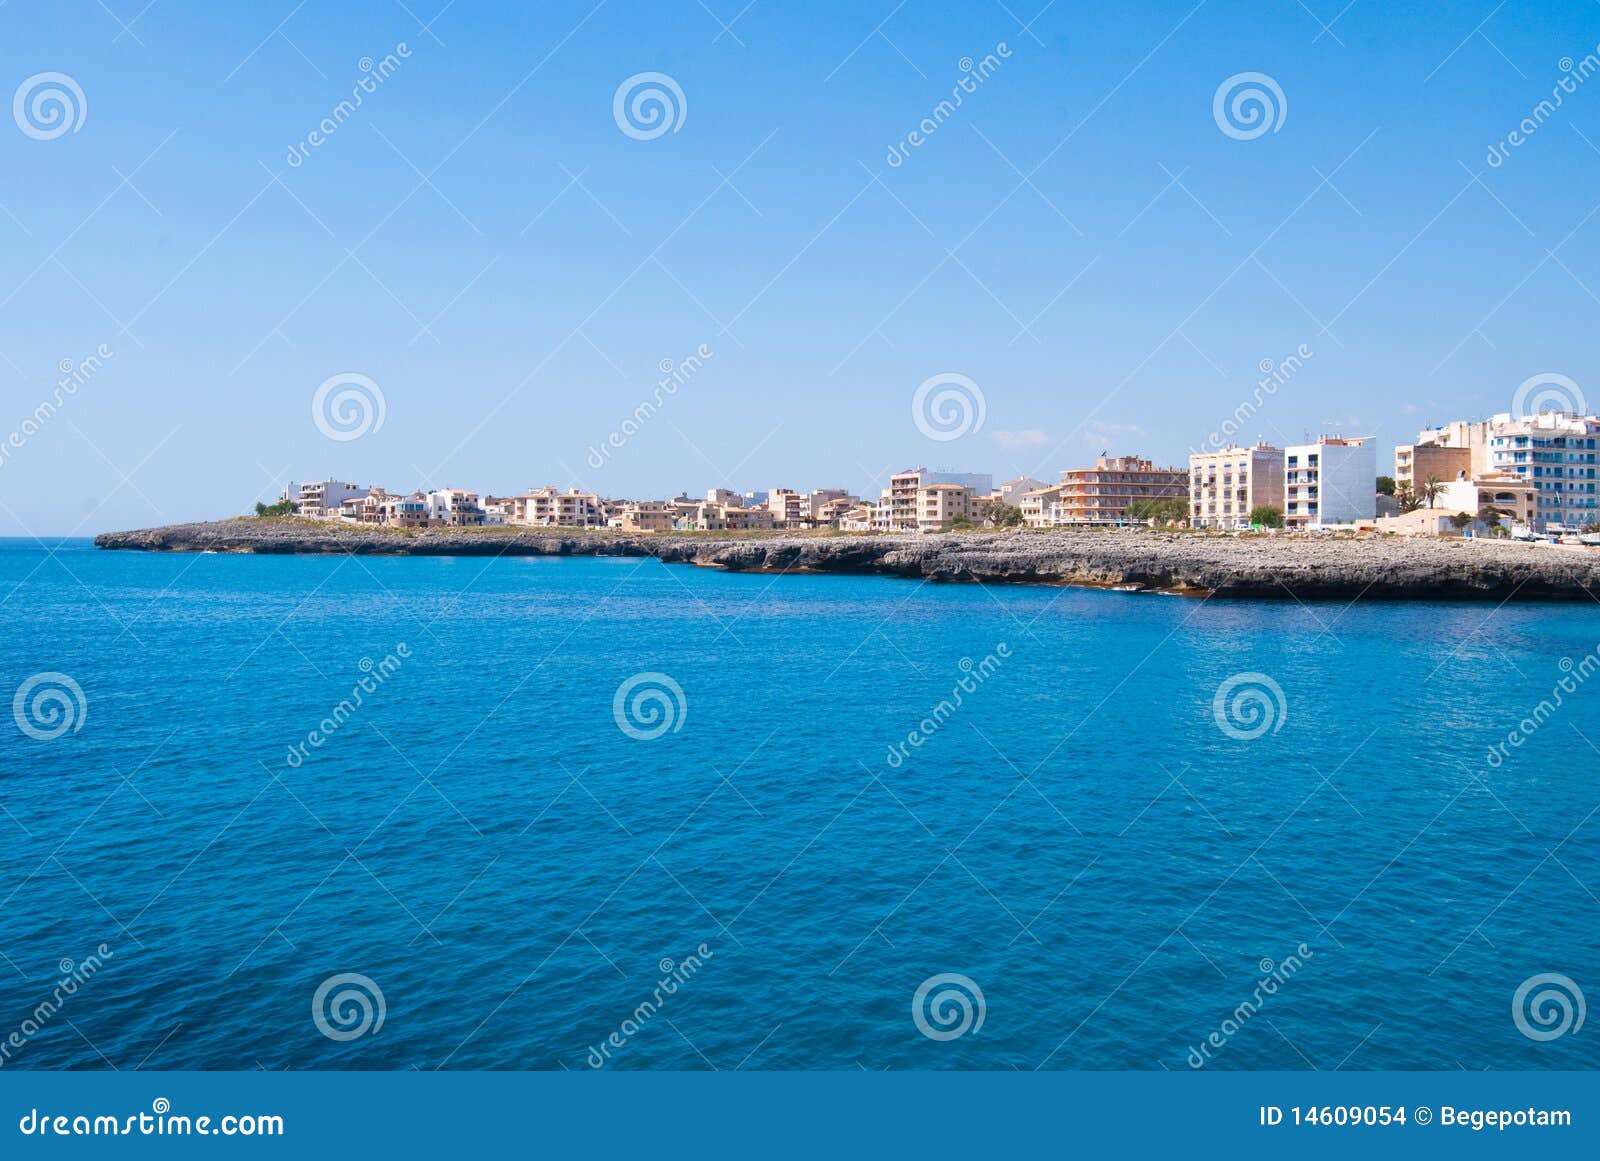 sa coma cape and mediterranean sea, majorca island